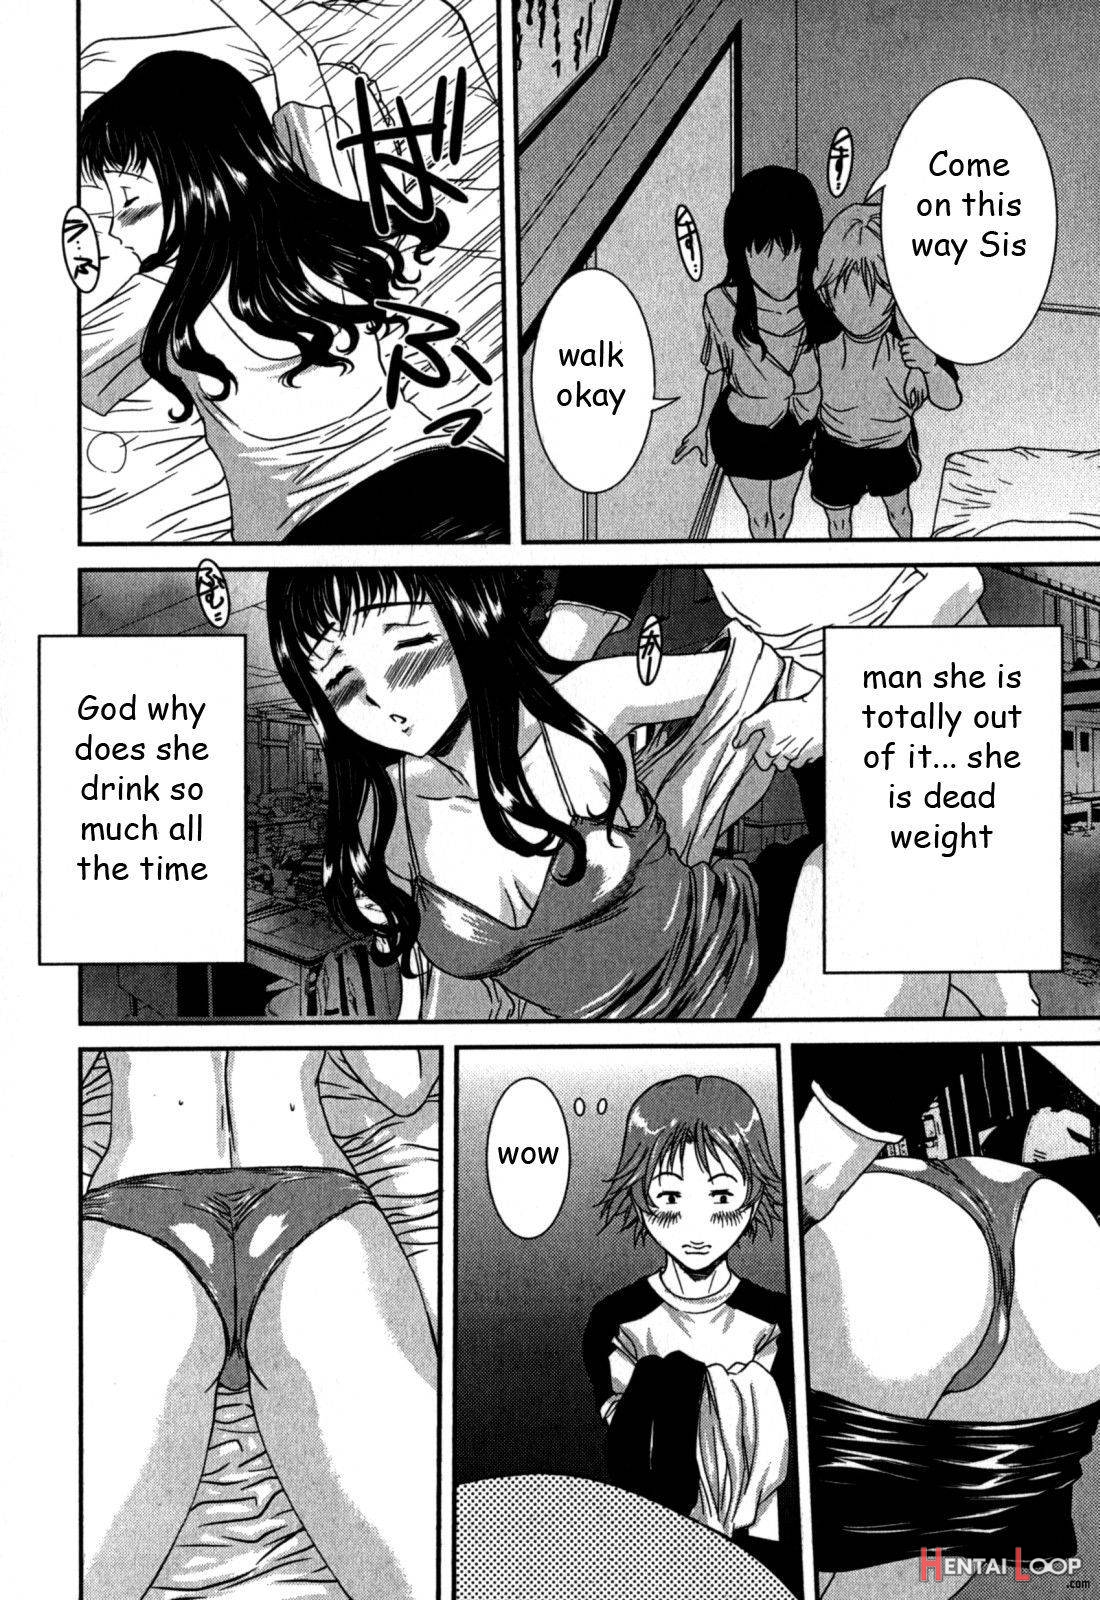 Drunk Sister Porn Cartoon - Page 7 of Drunk Sister Fuck (by Uchida Koneri) - Hentai doujinshi for free  at HentaiLoop